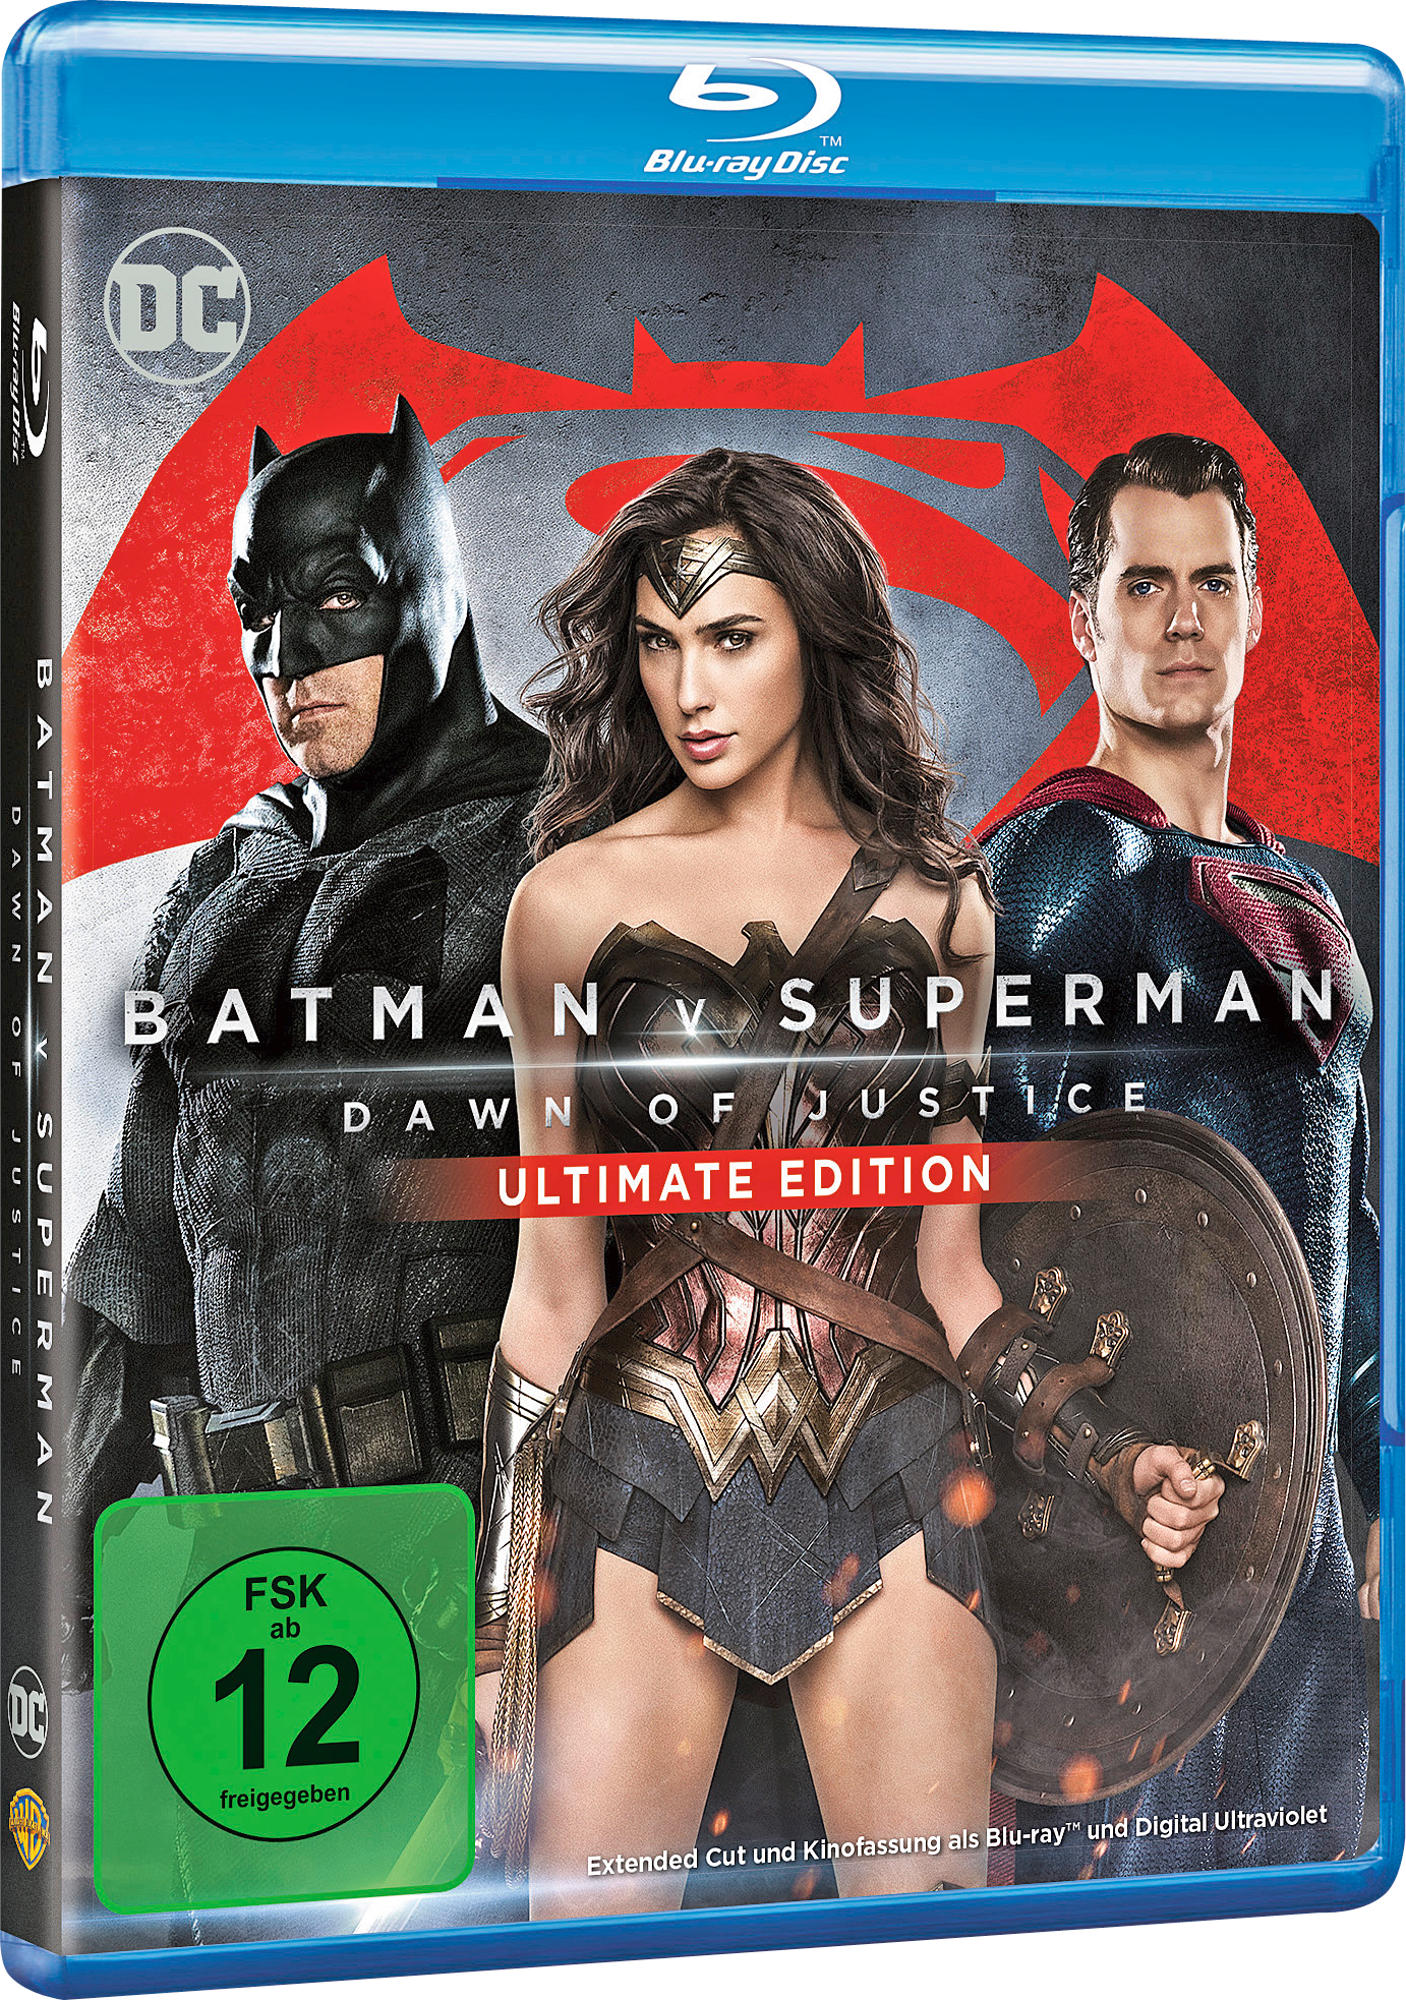 Batman v Justice of Dawn Edition) (Ultimate Superman: Blu-ray